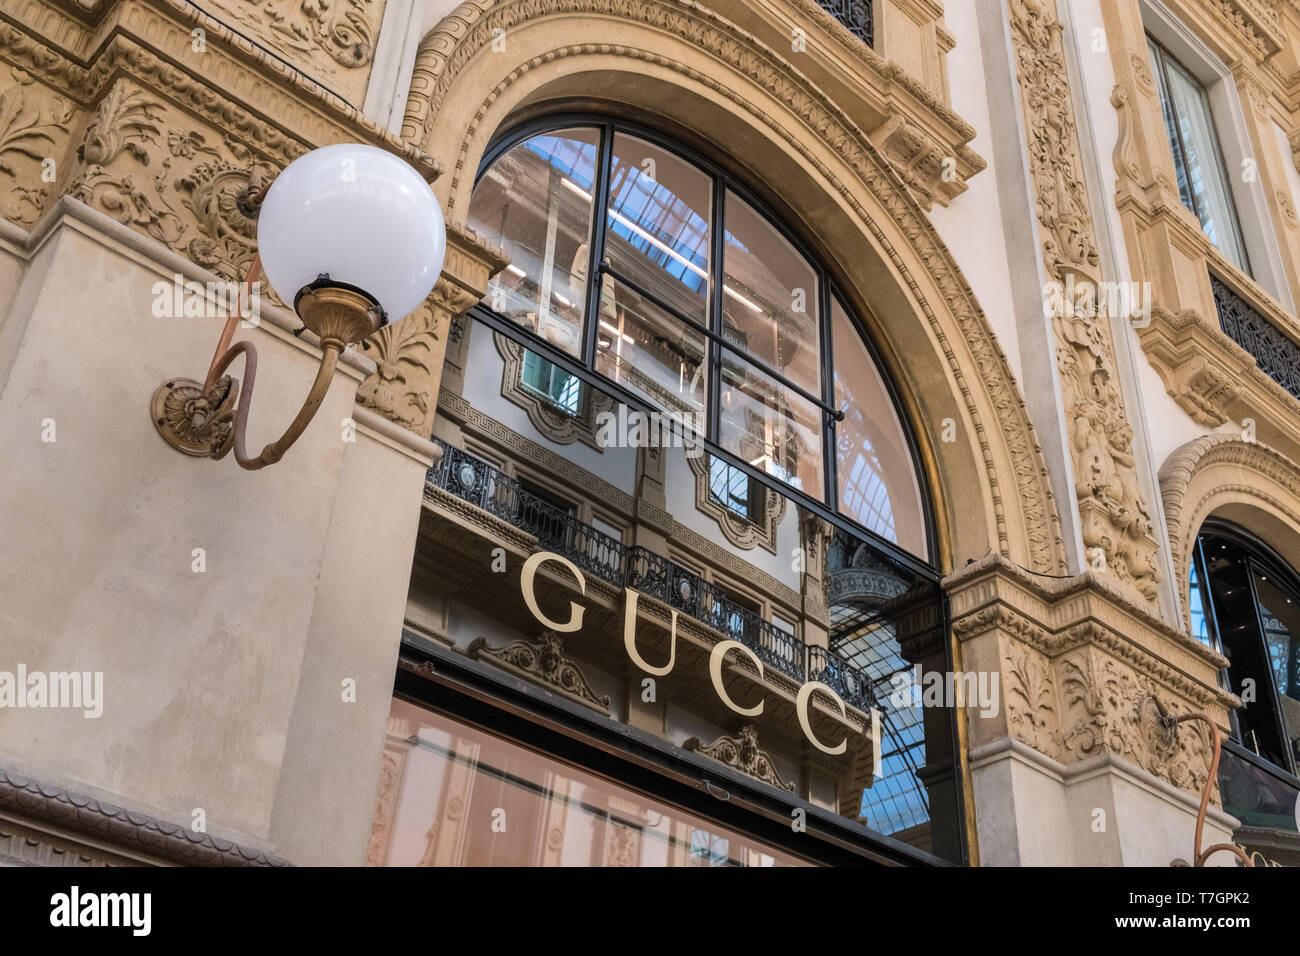 Gucci store, Galleria Vittorio Emanuele II shopping arcade interior, Milan,  Italy Stock Photo - Alamy